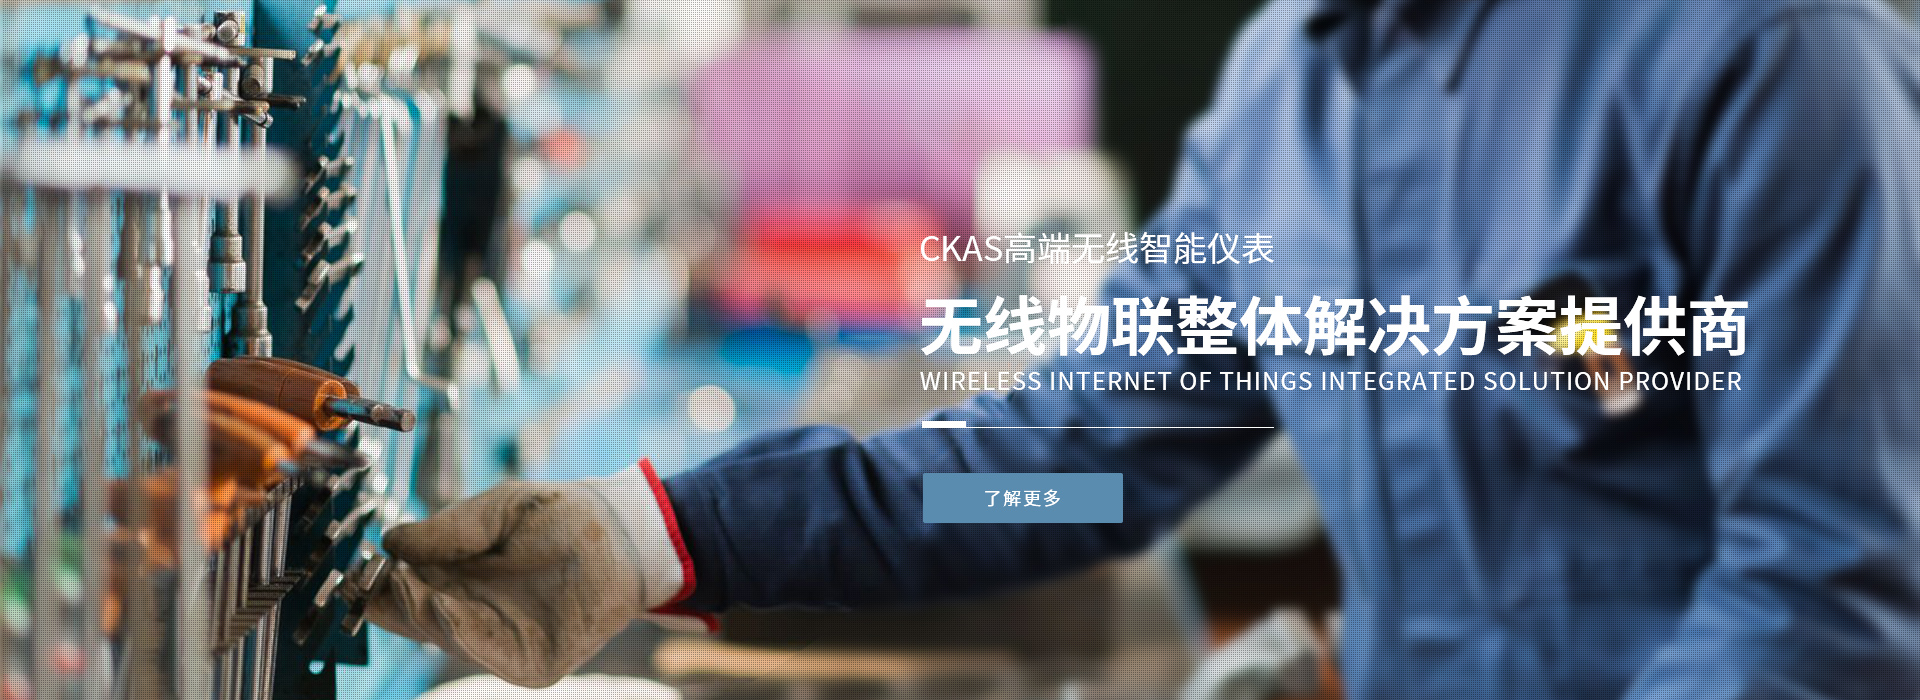 CKAS-banner4